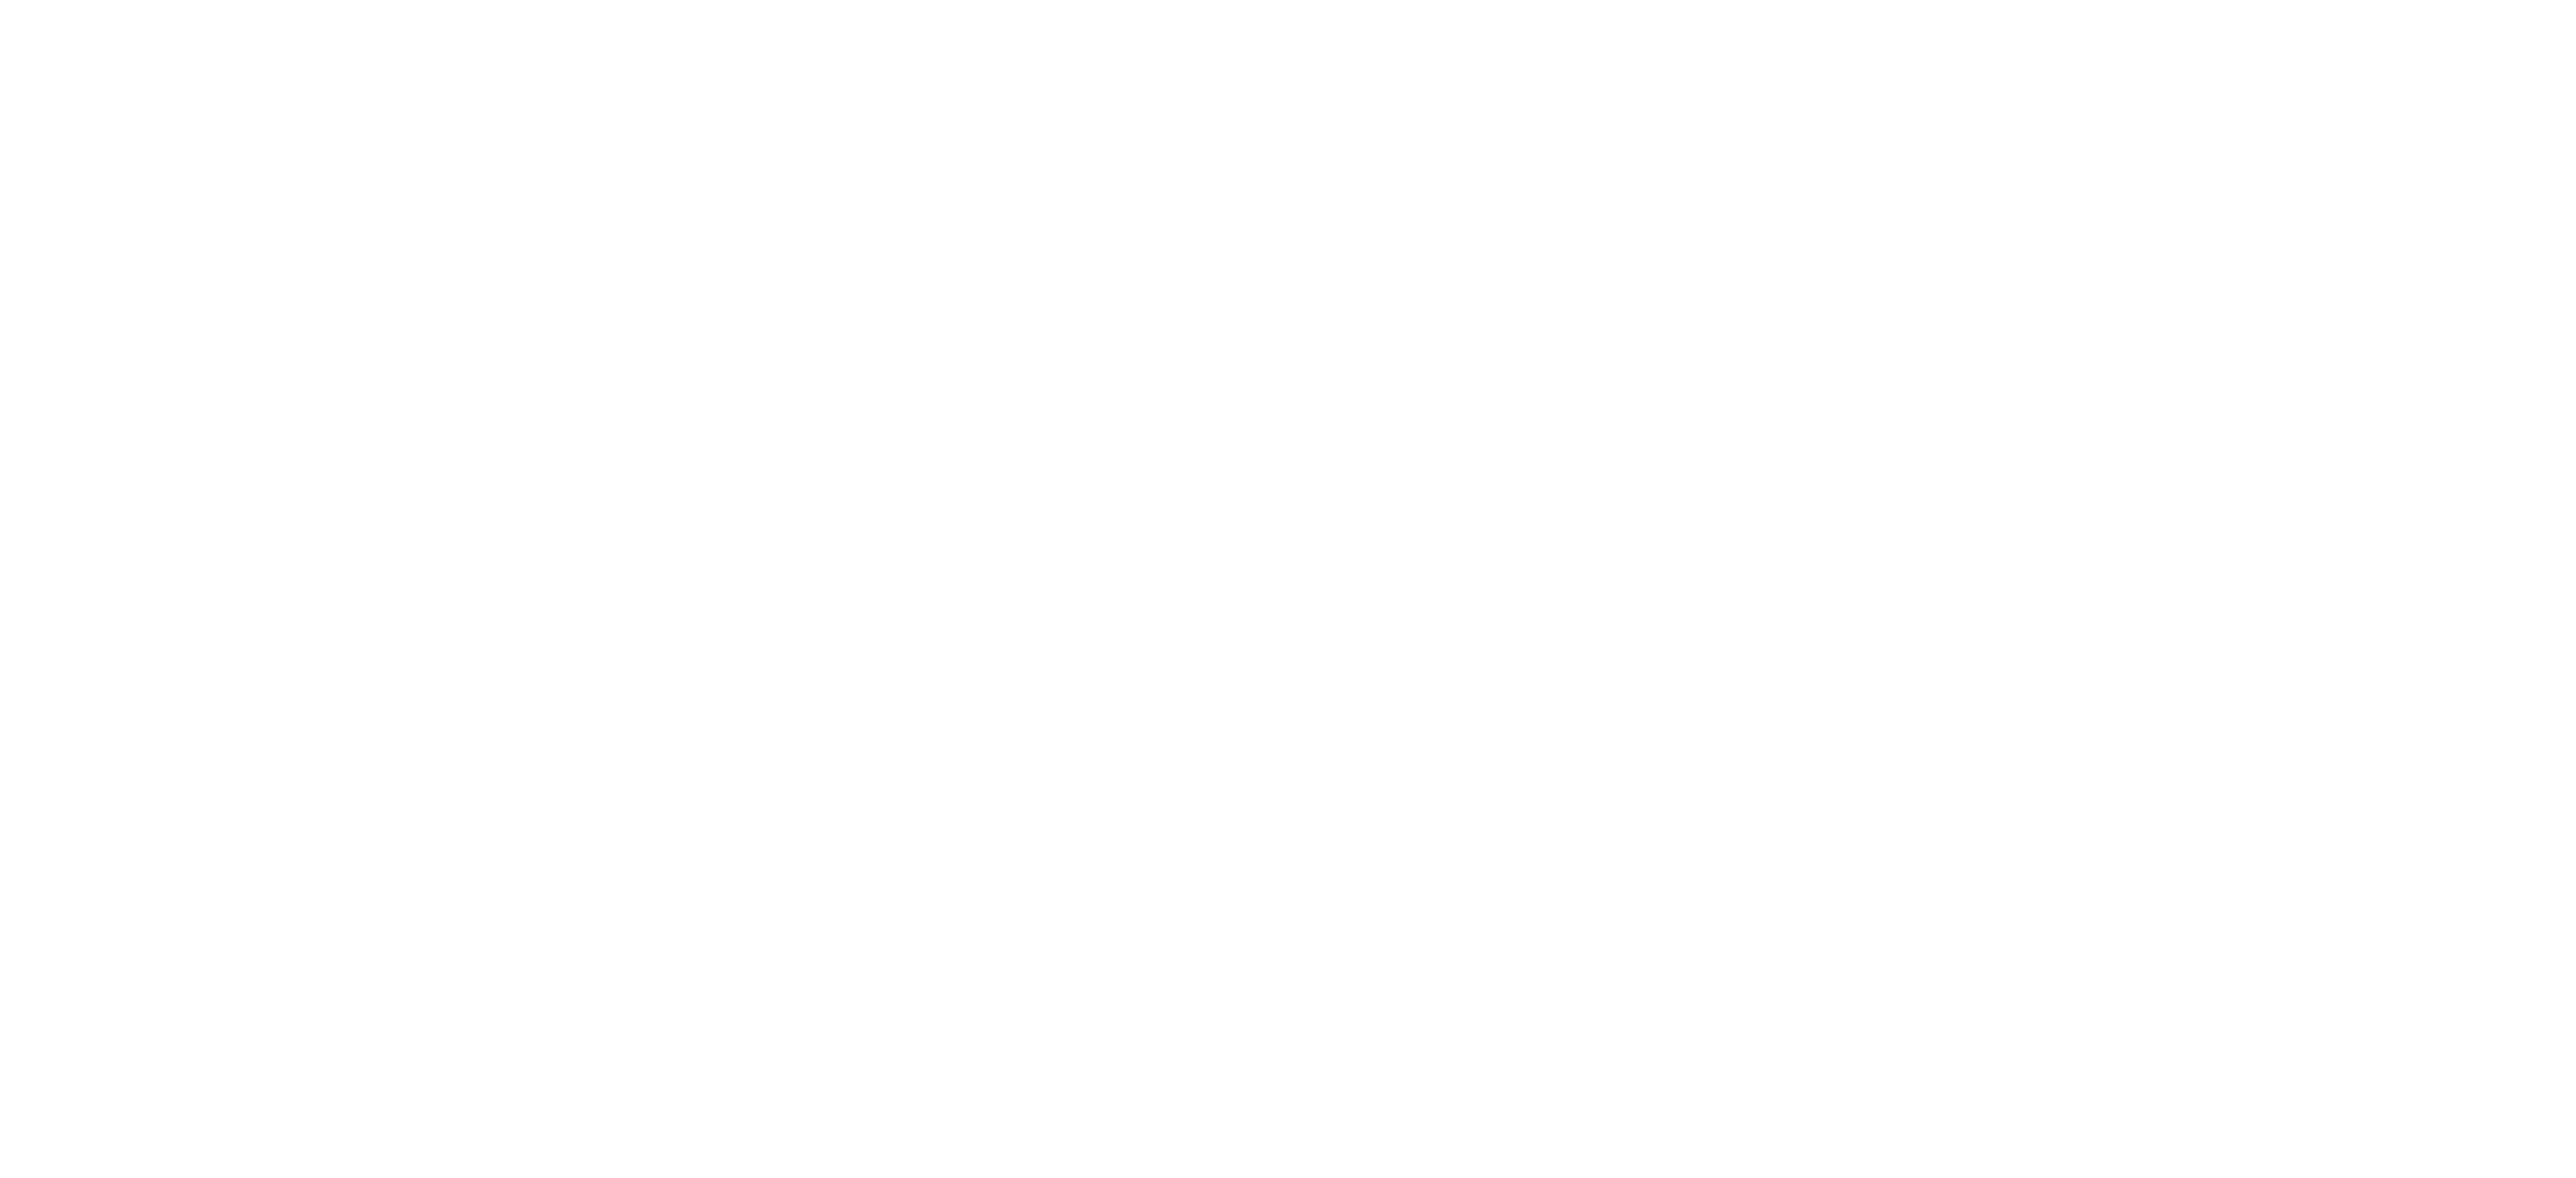 Caleb Montgomery